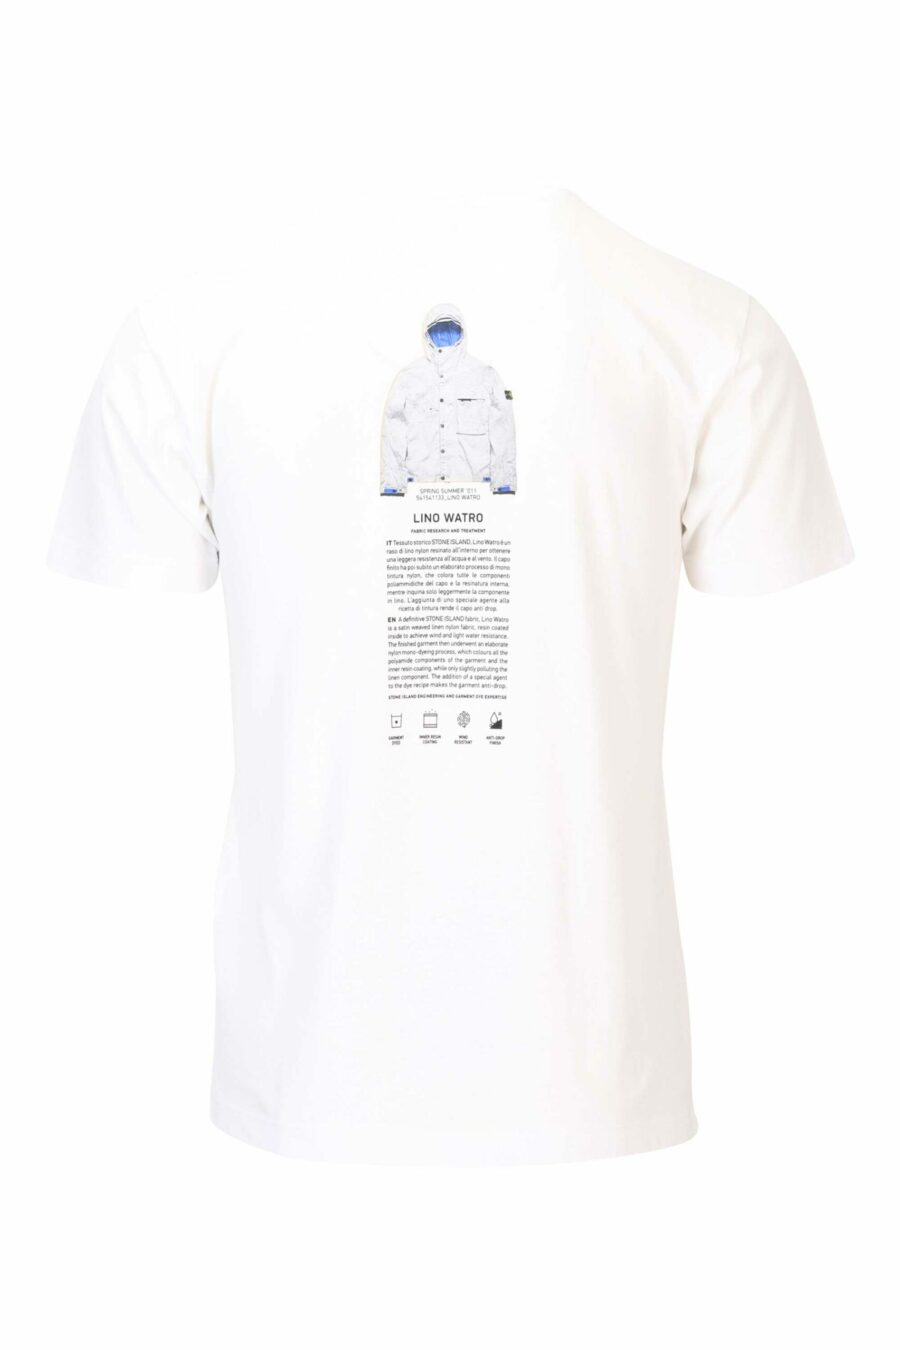 T-shirt blanc avec logo centré et impression au dos - 8052572755866 2 scaled